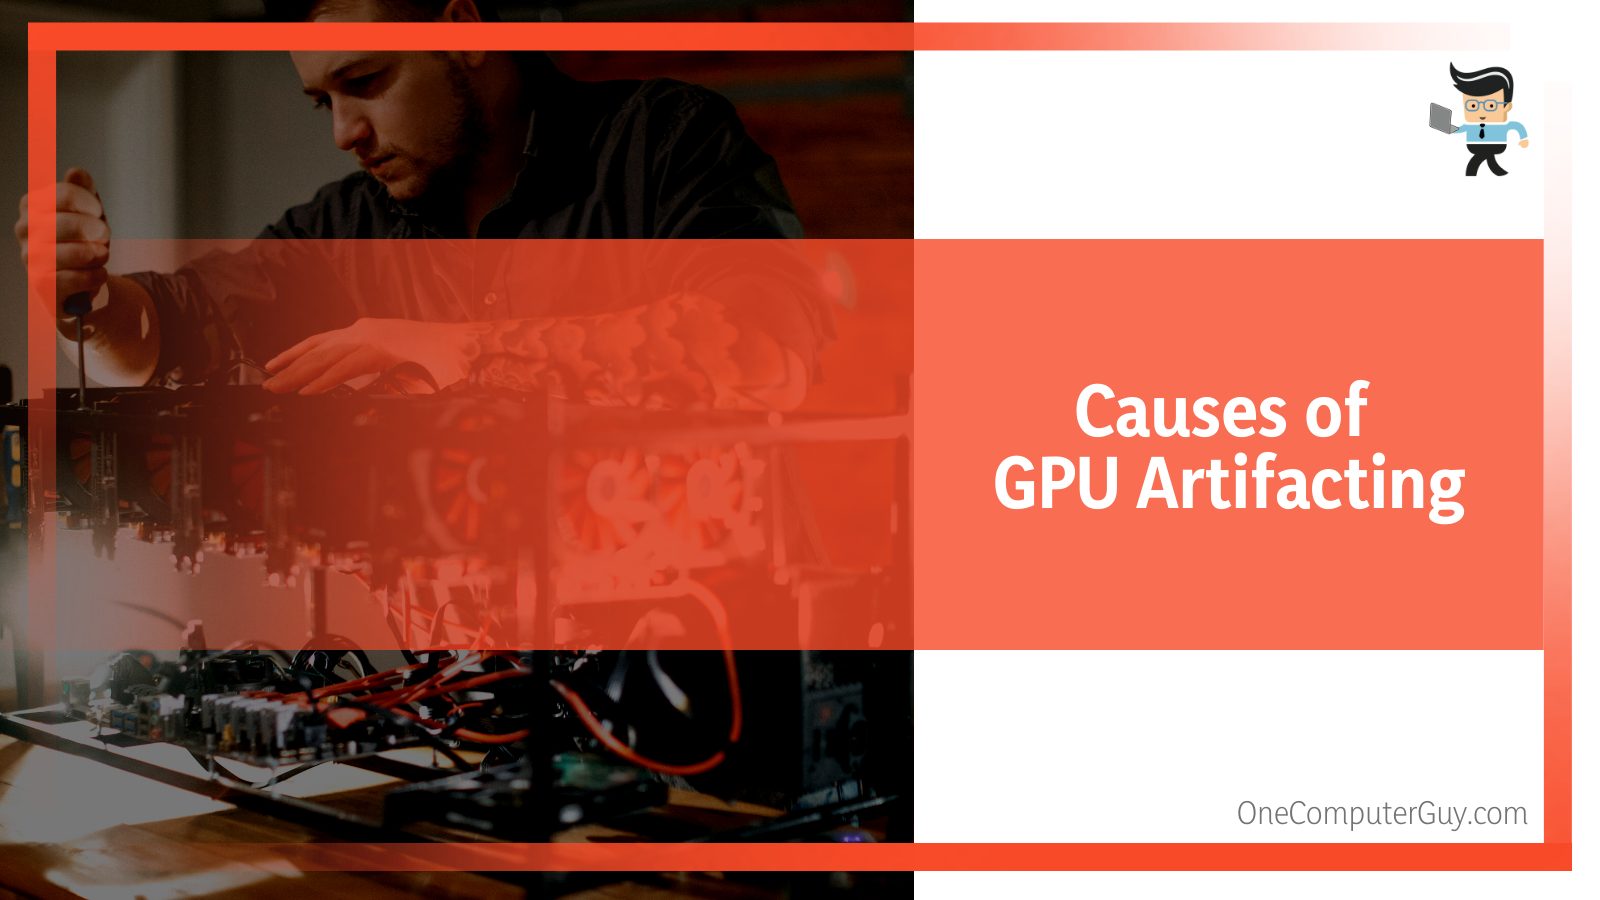 Causes of GPU Malfunction